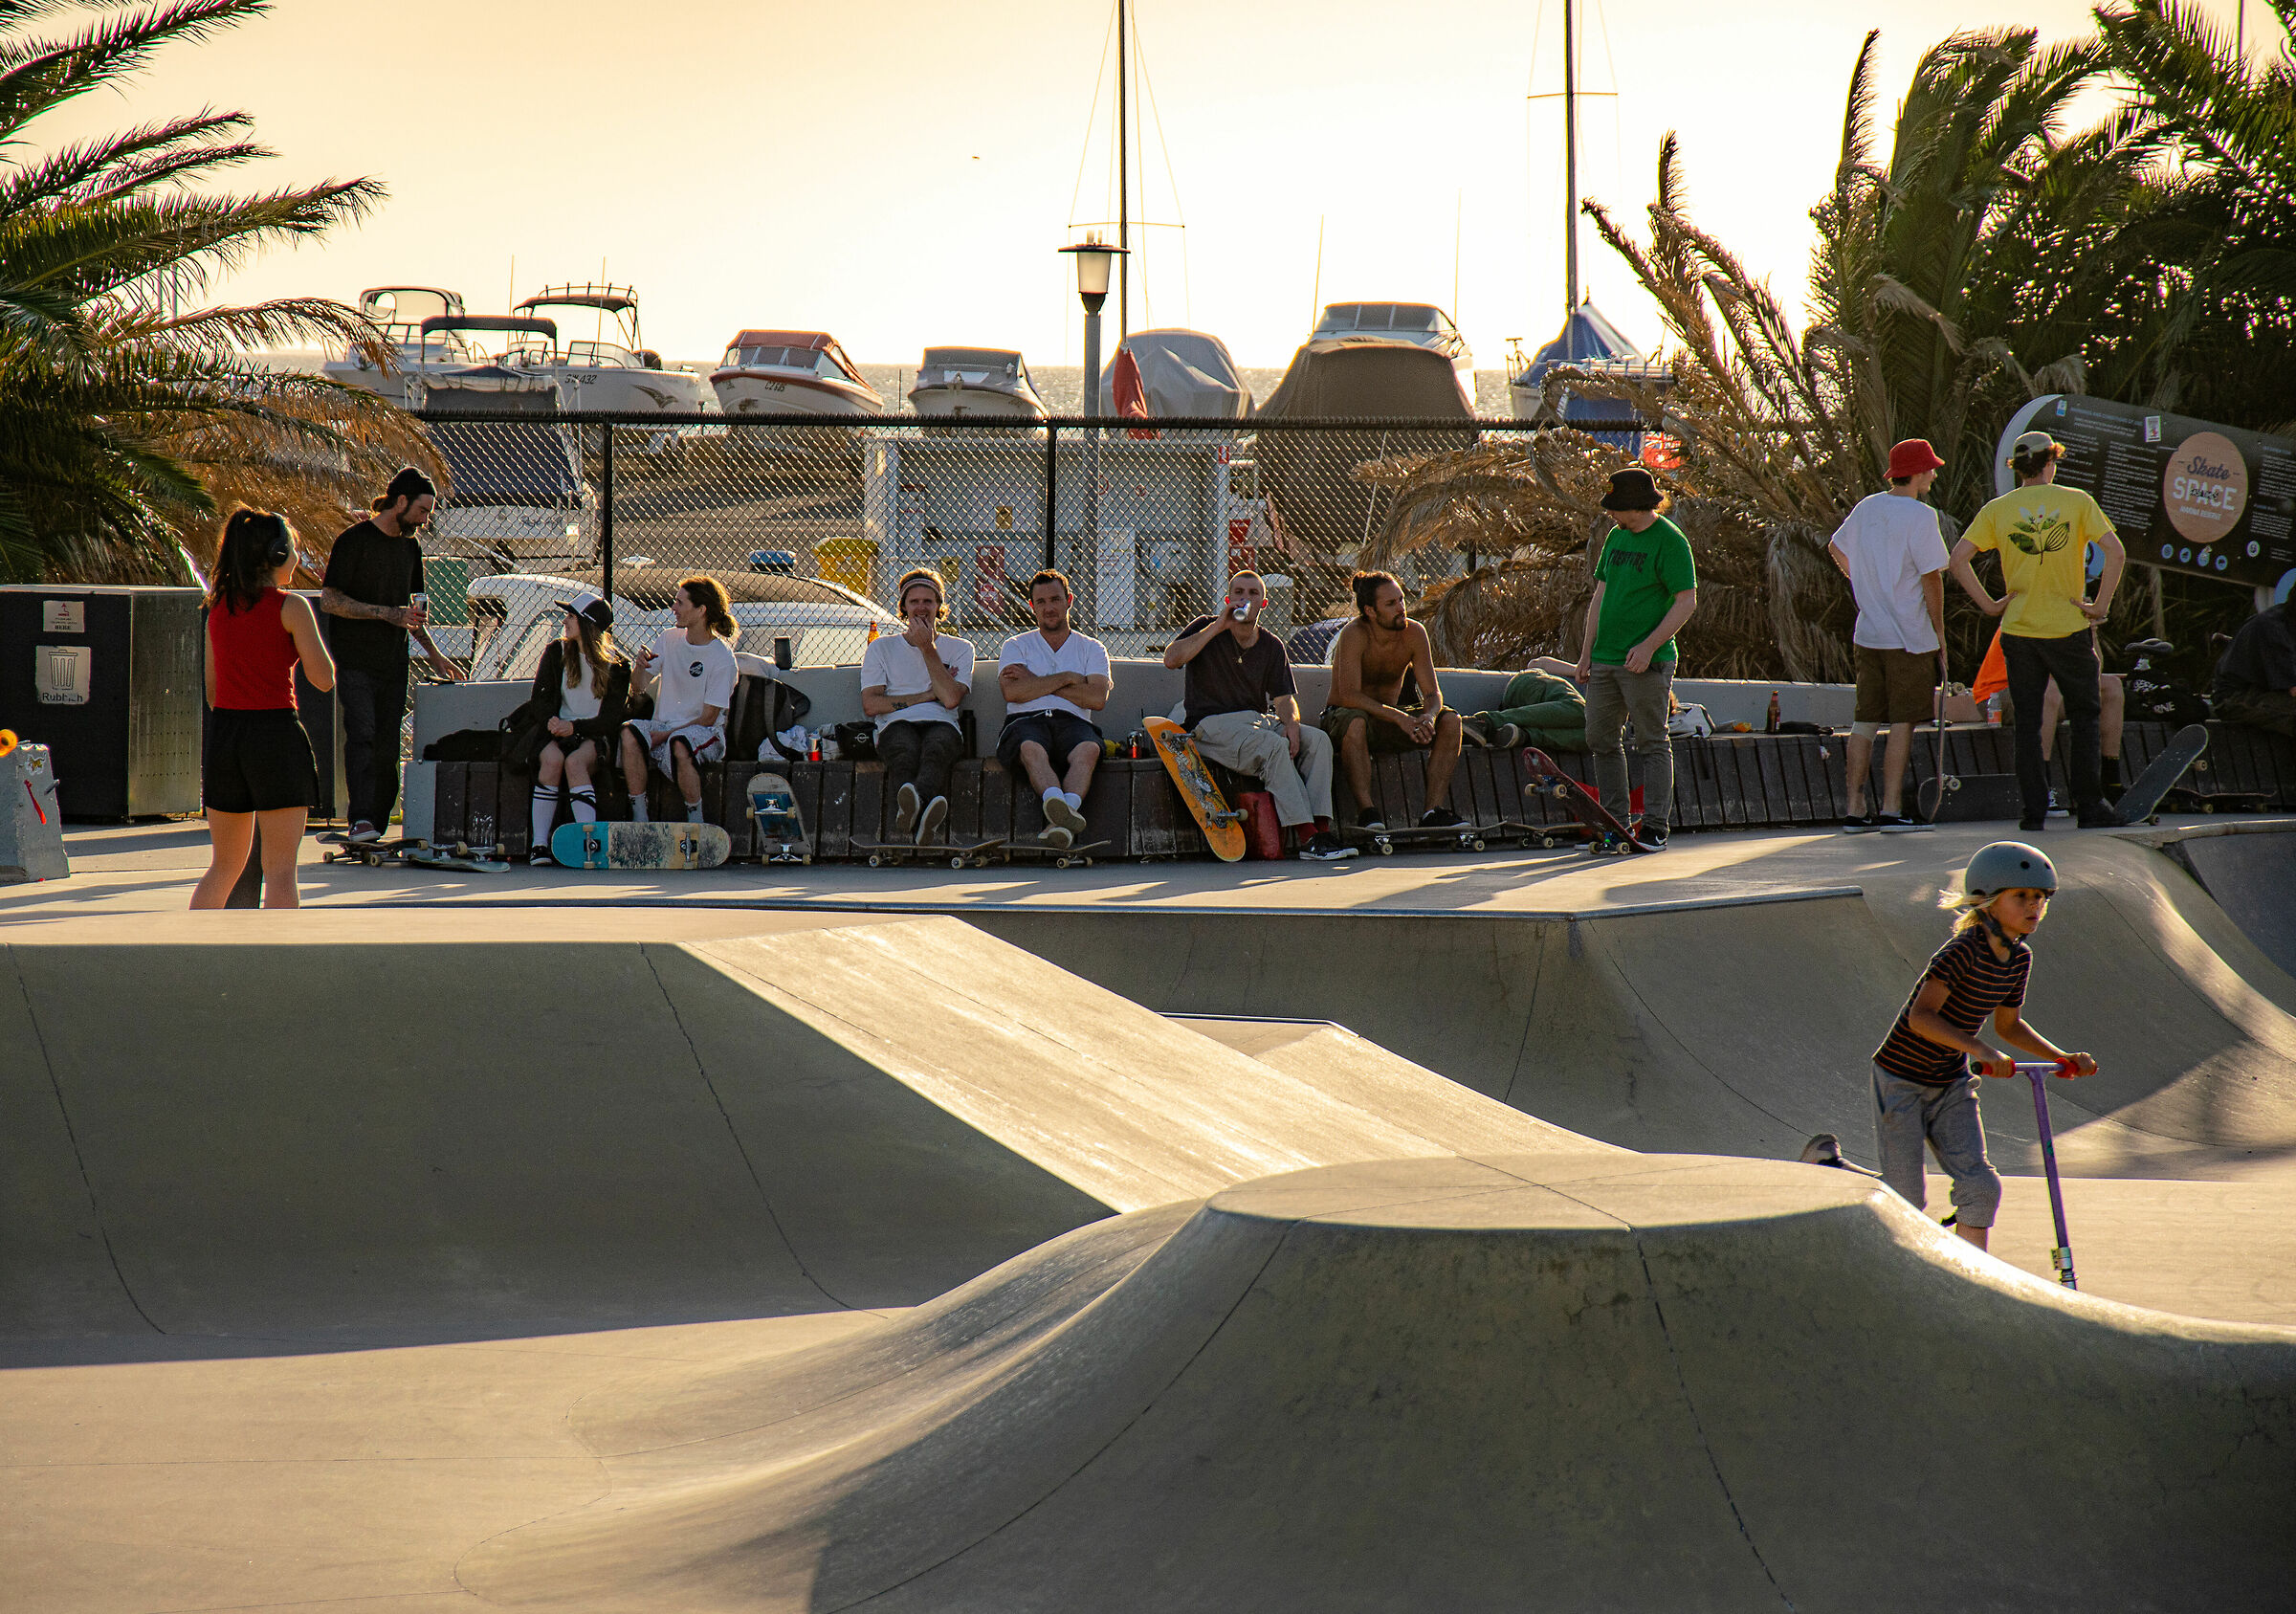 Skate Park, California...